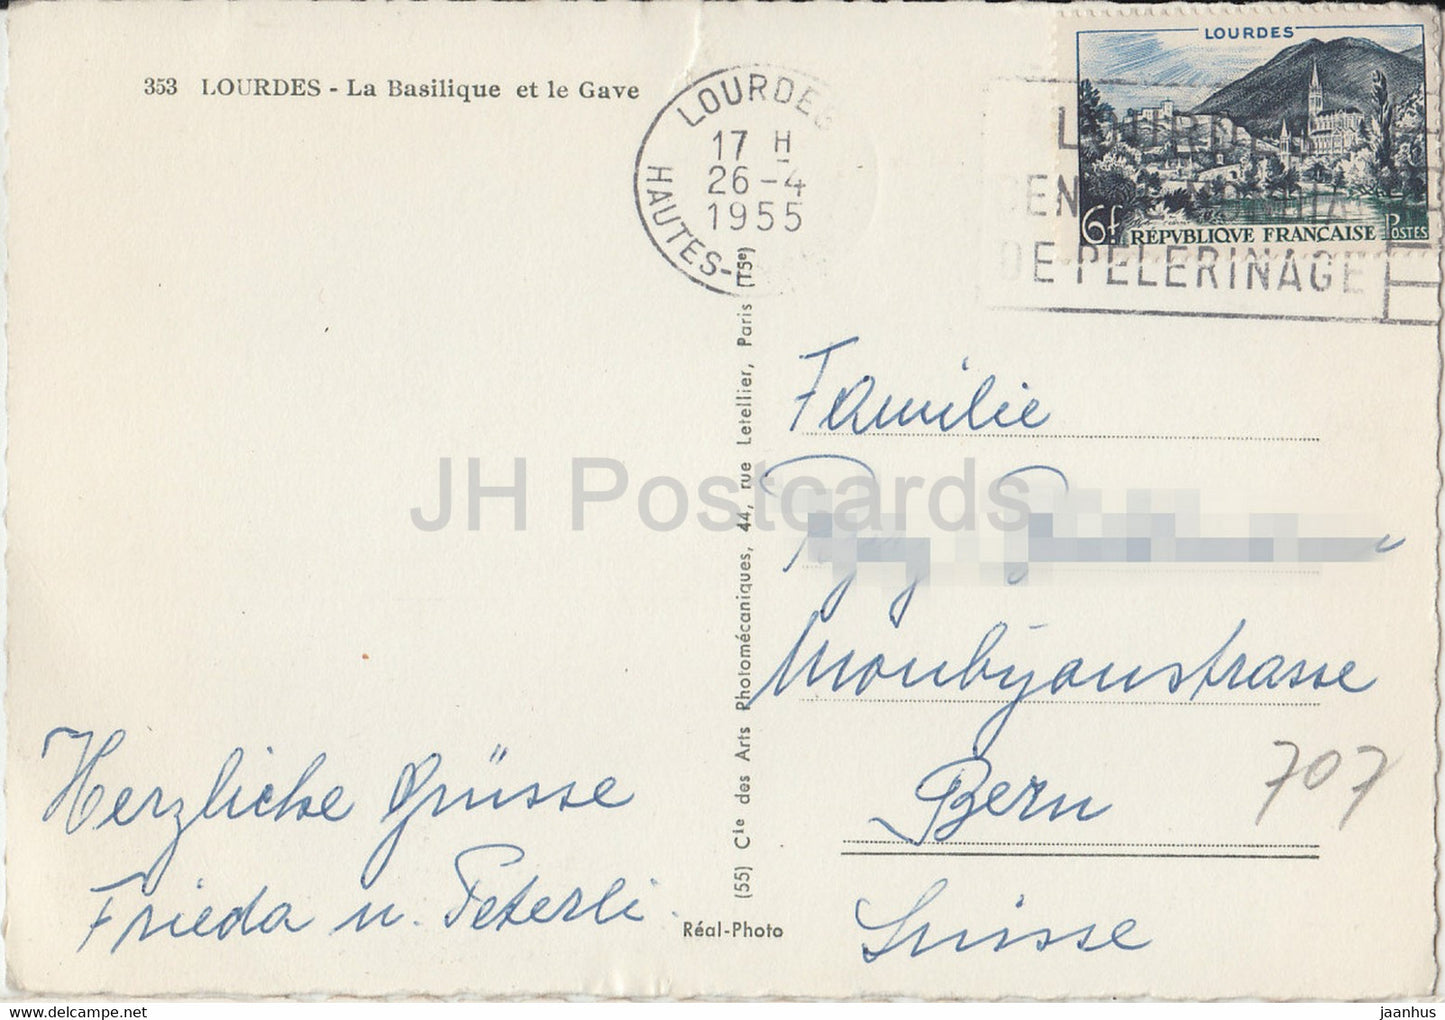 Lourdes - La Basilique et le Gave - 353 - old postcard - 1955 - France - used